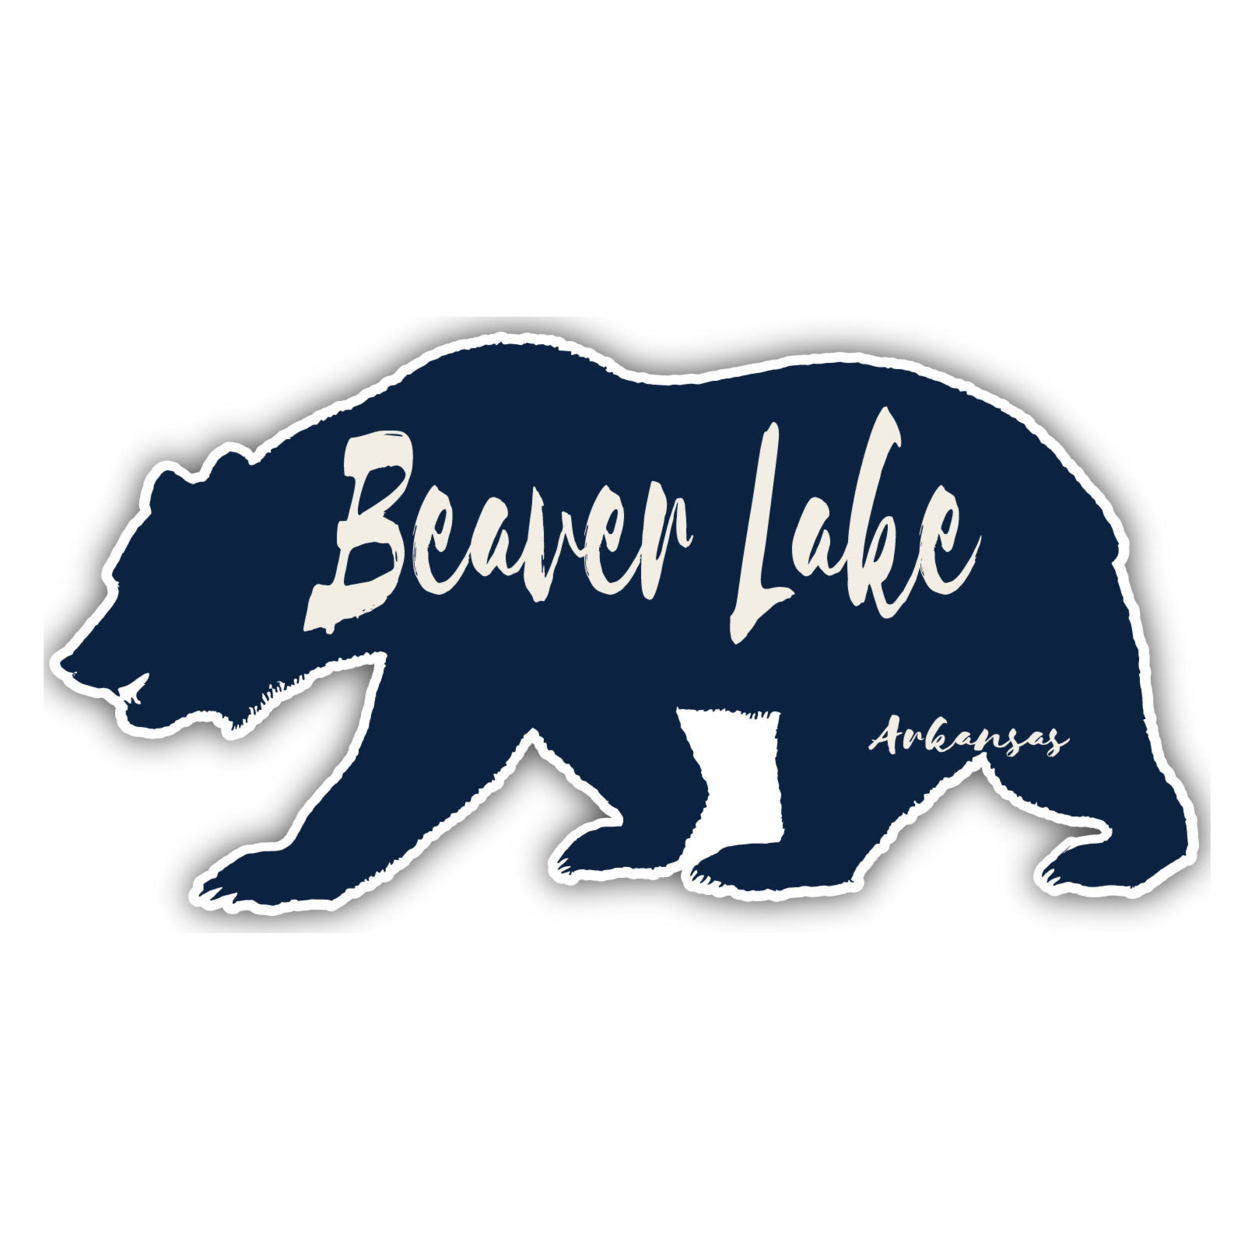 Beaver Lake Arkansas Souvenir Decorative Stickers (Choose Theme And Size) - 4-Pack, 10-Inch, Tent